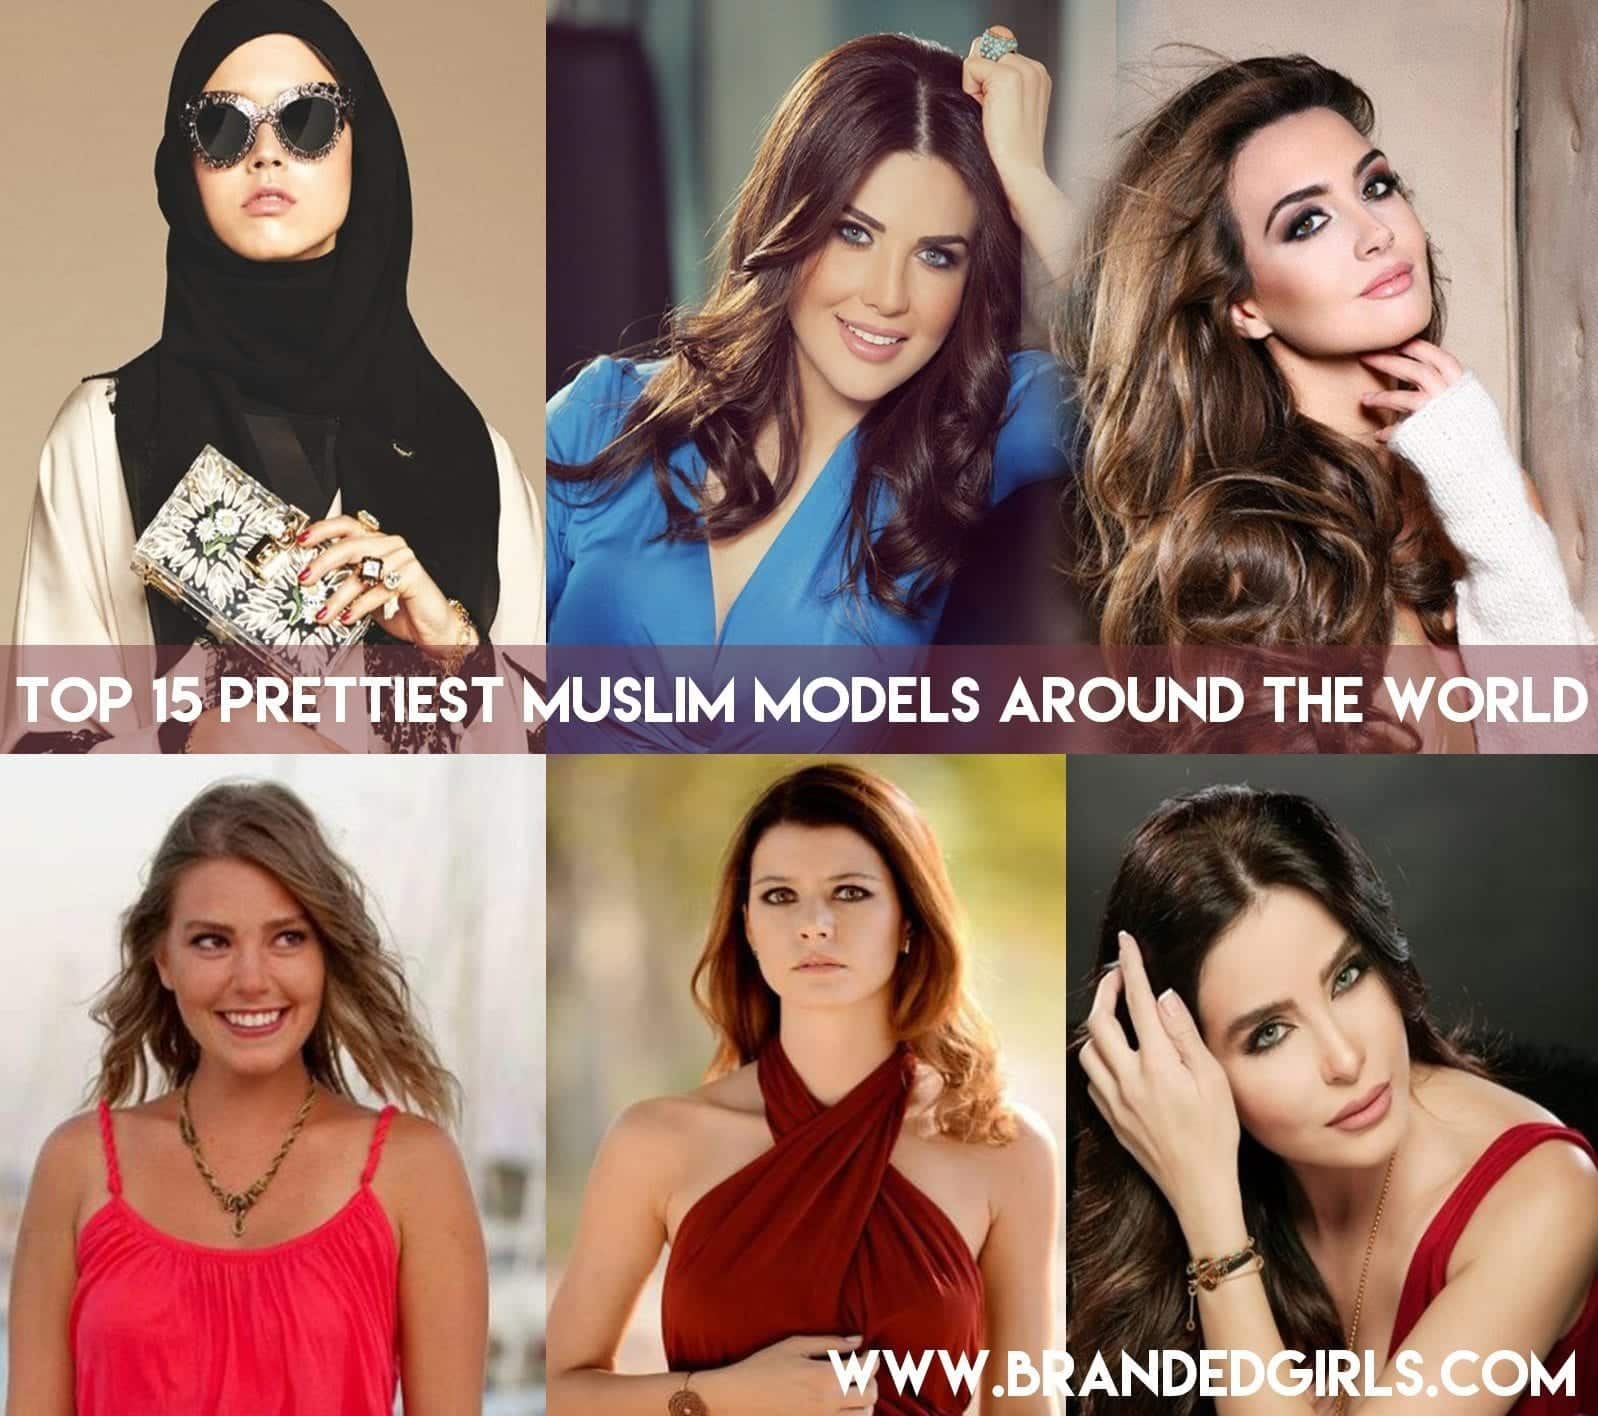 Top 15 Prettiest Muslim Models Around the World